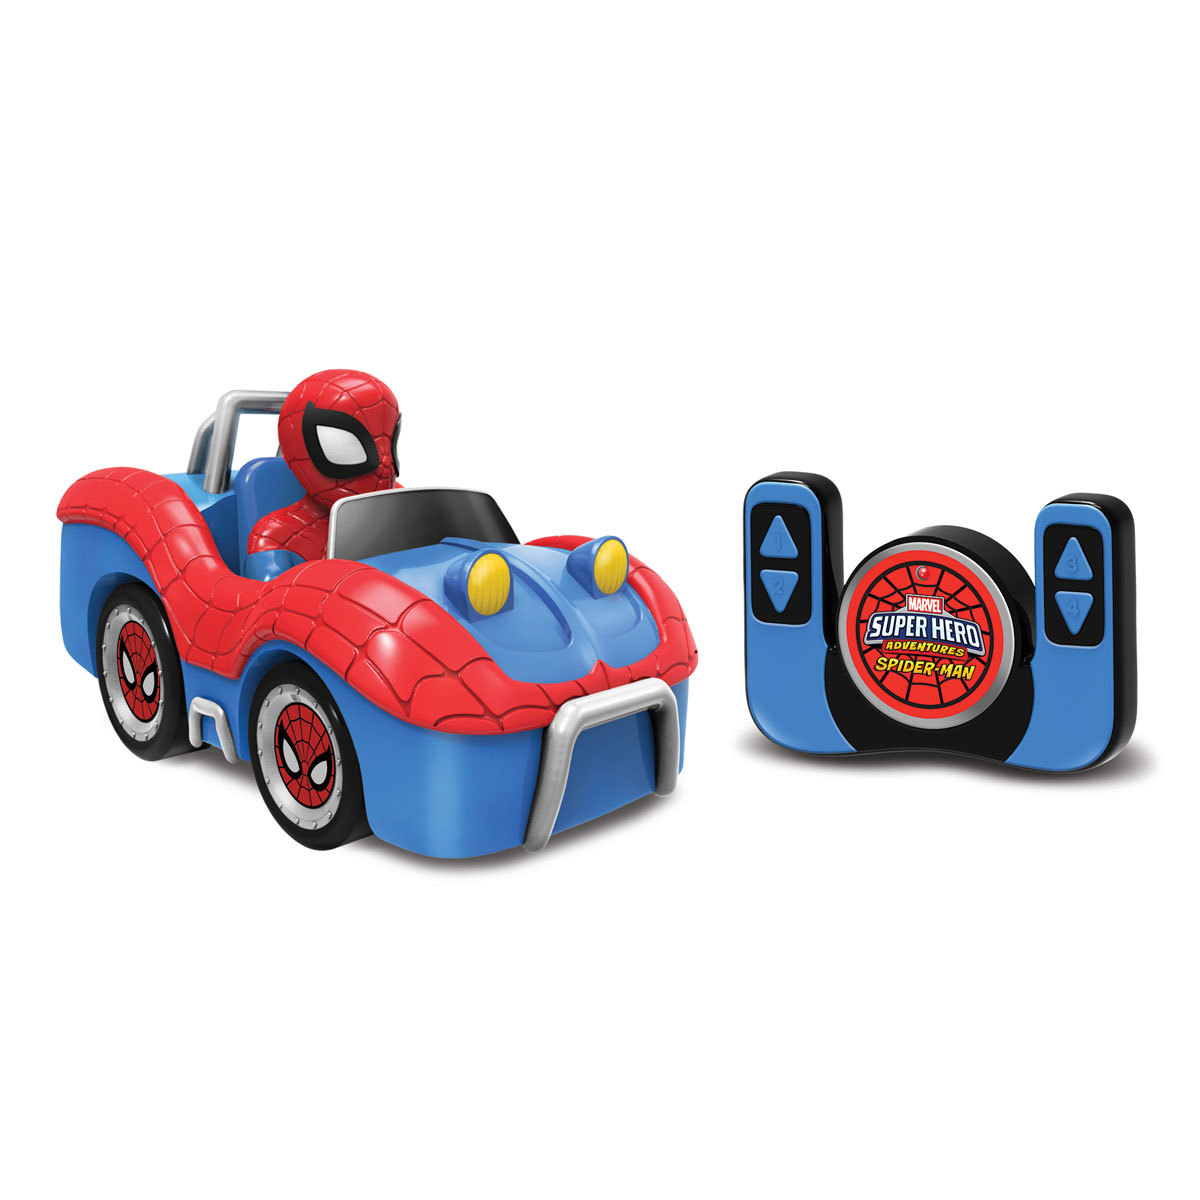 spiderman remote control car toys r us